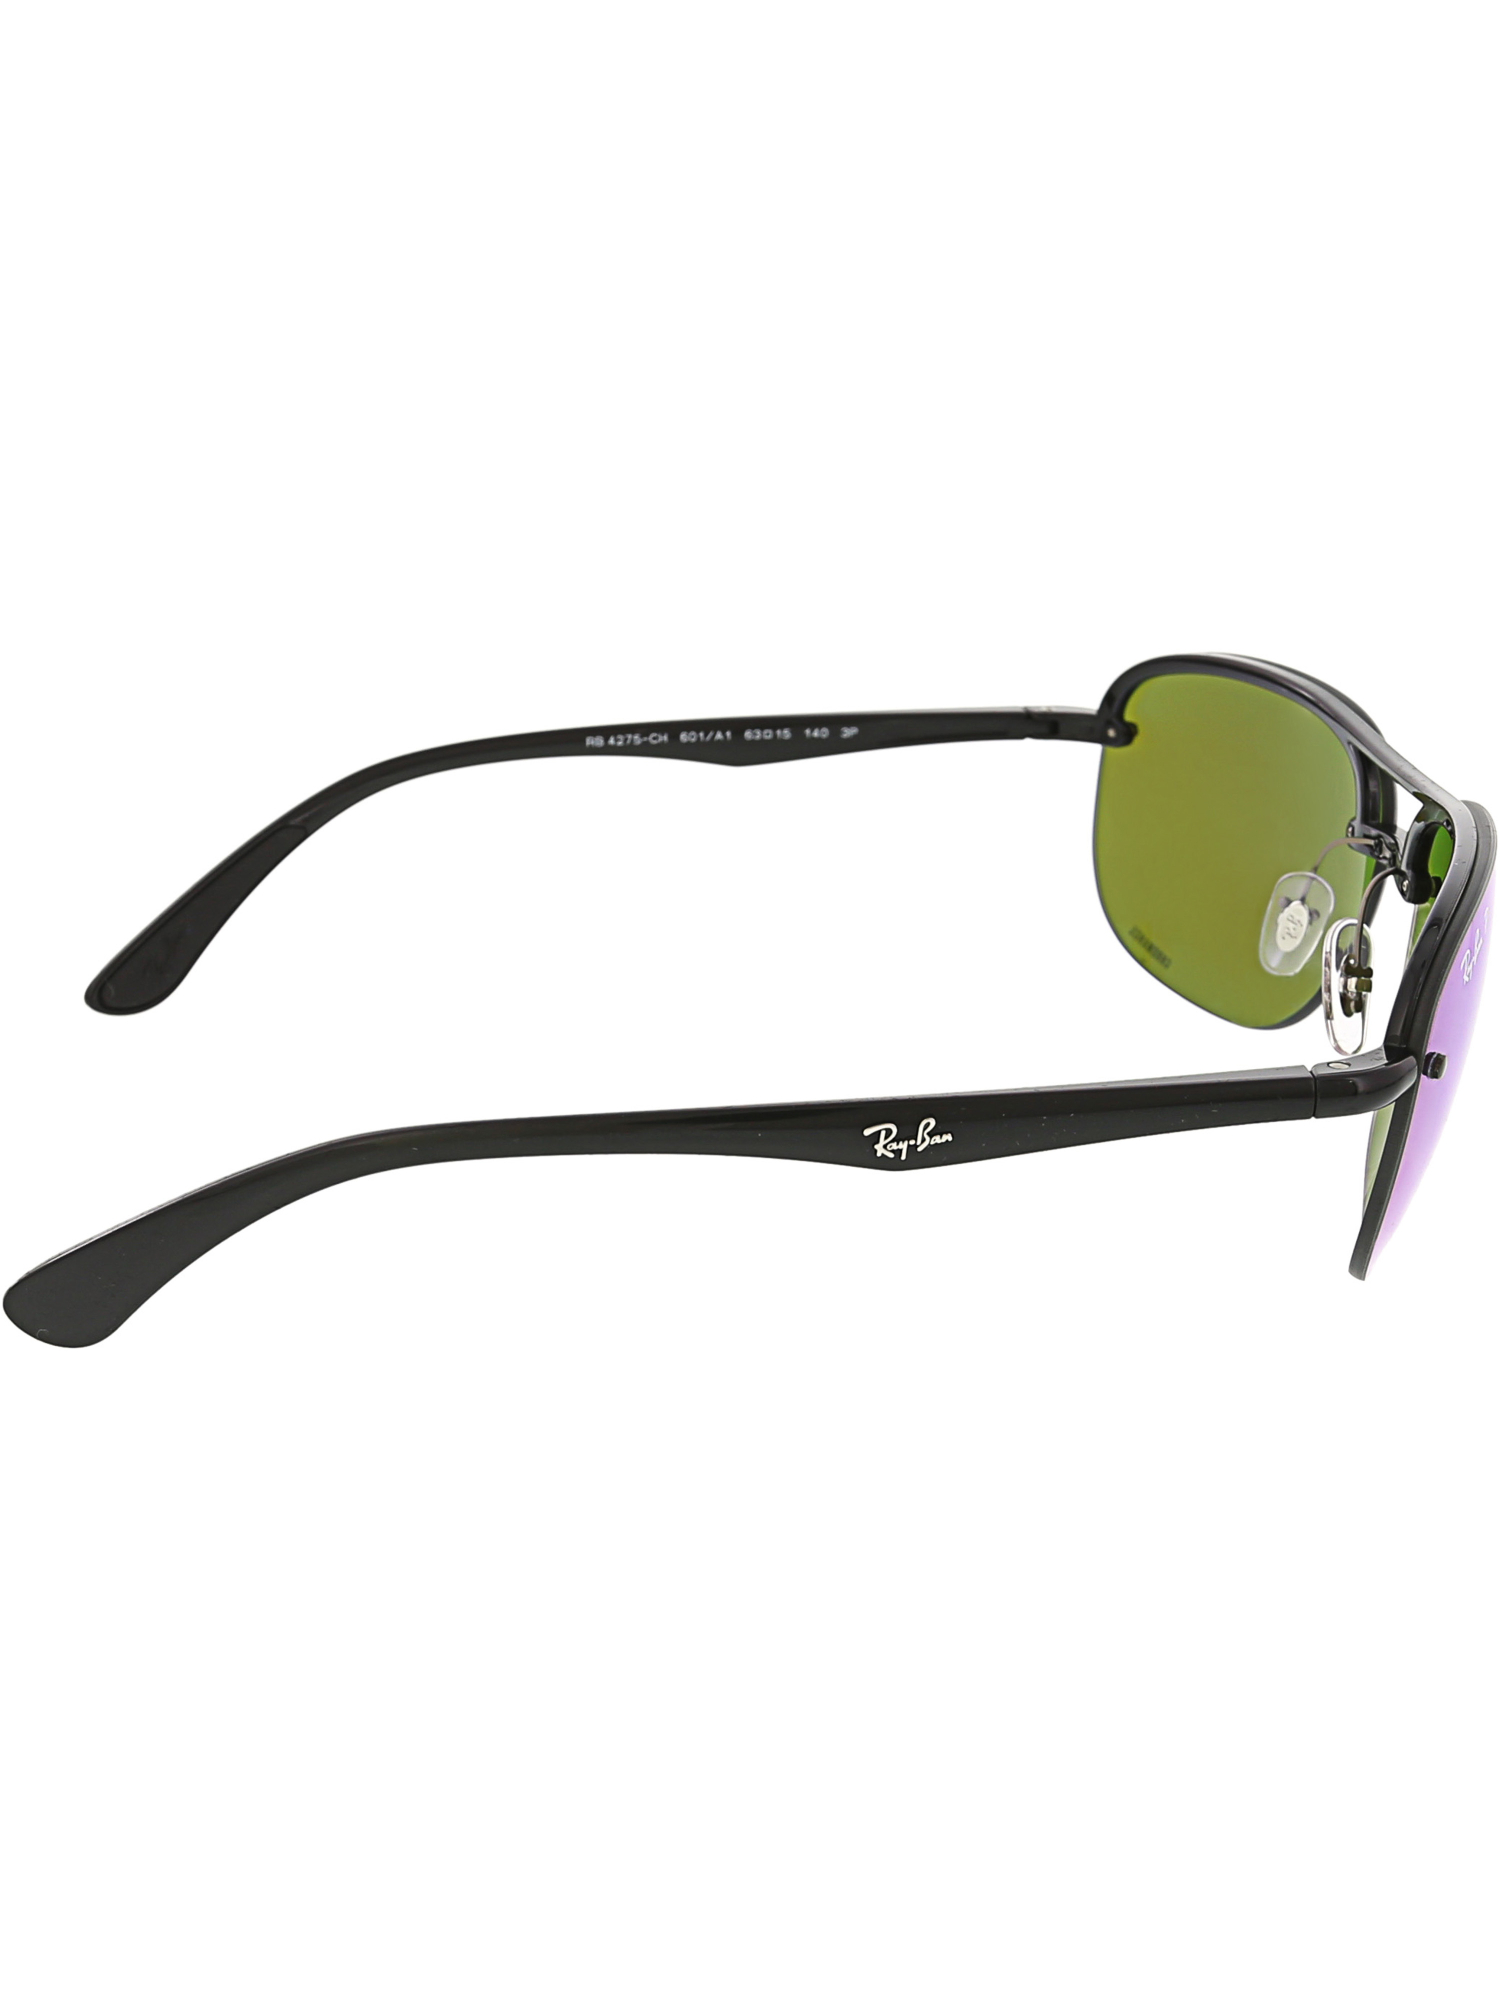 Ray-Ban Men's Polarized Chromance RB4275CH-601/A1-63 Black Rimless Sunglasses - image 2 of 3